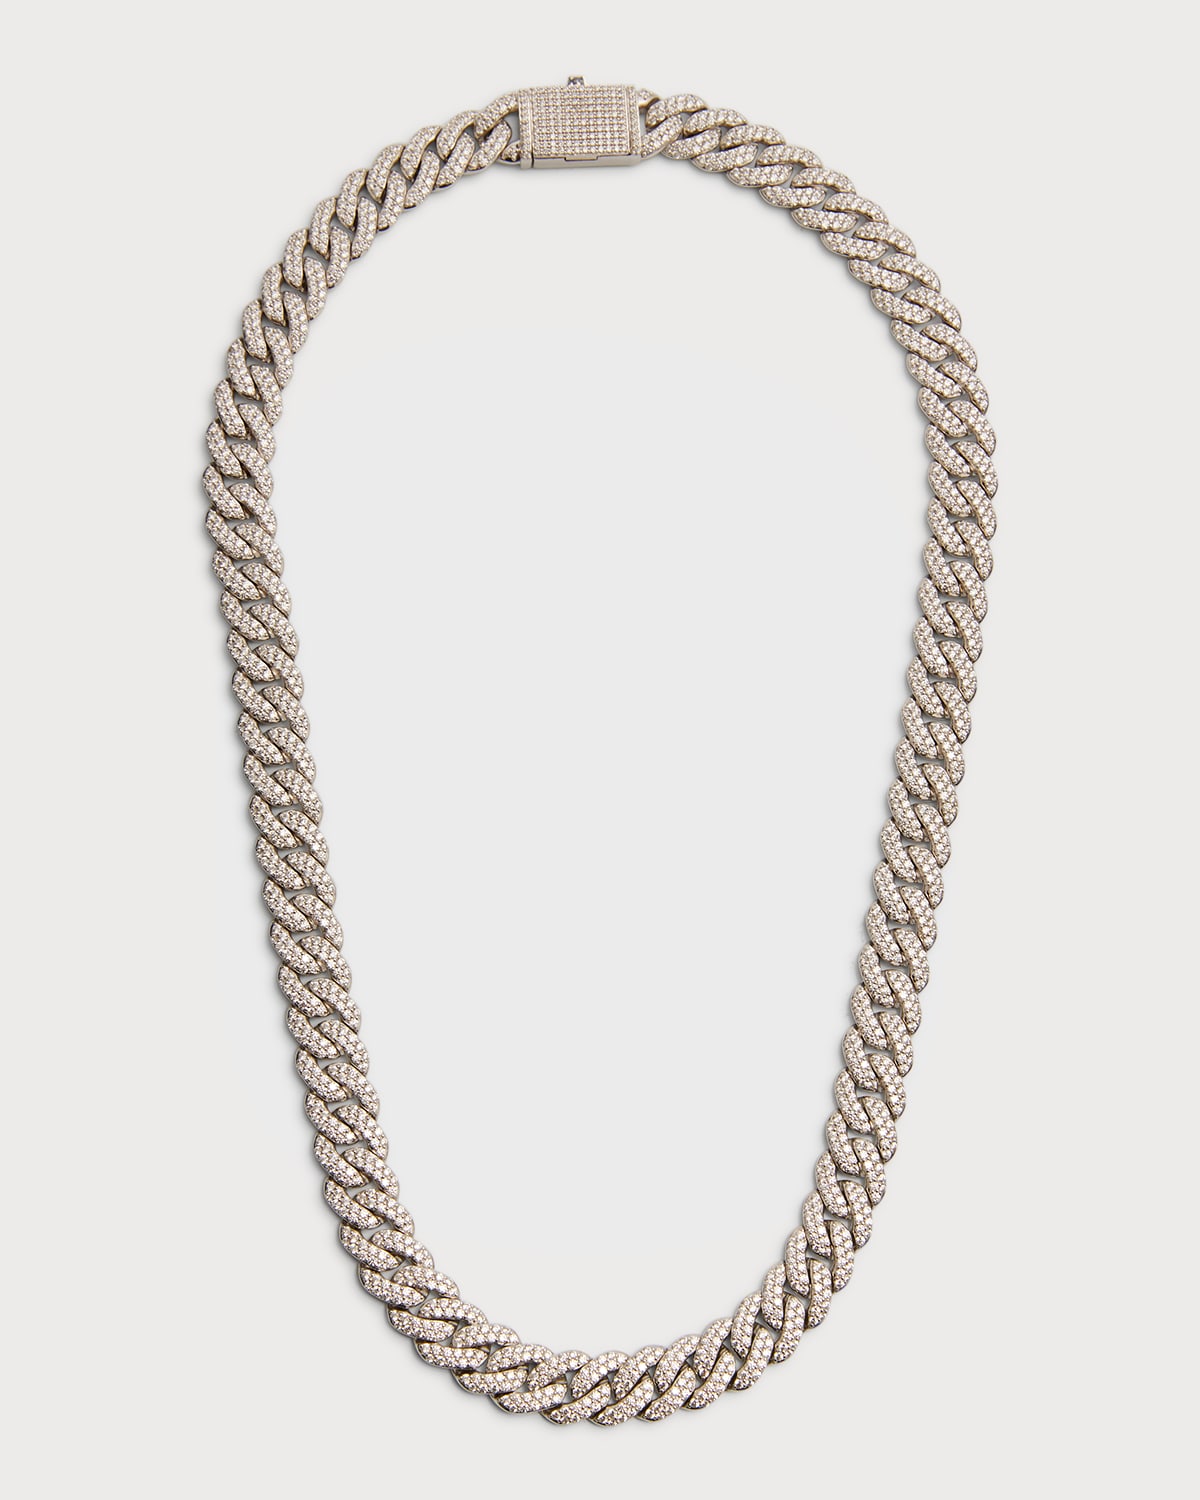 Neiman Marcus Diamonds 18k White Gold Diamond Curb Link Chain, 22"l